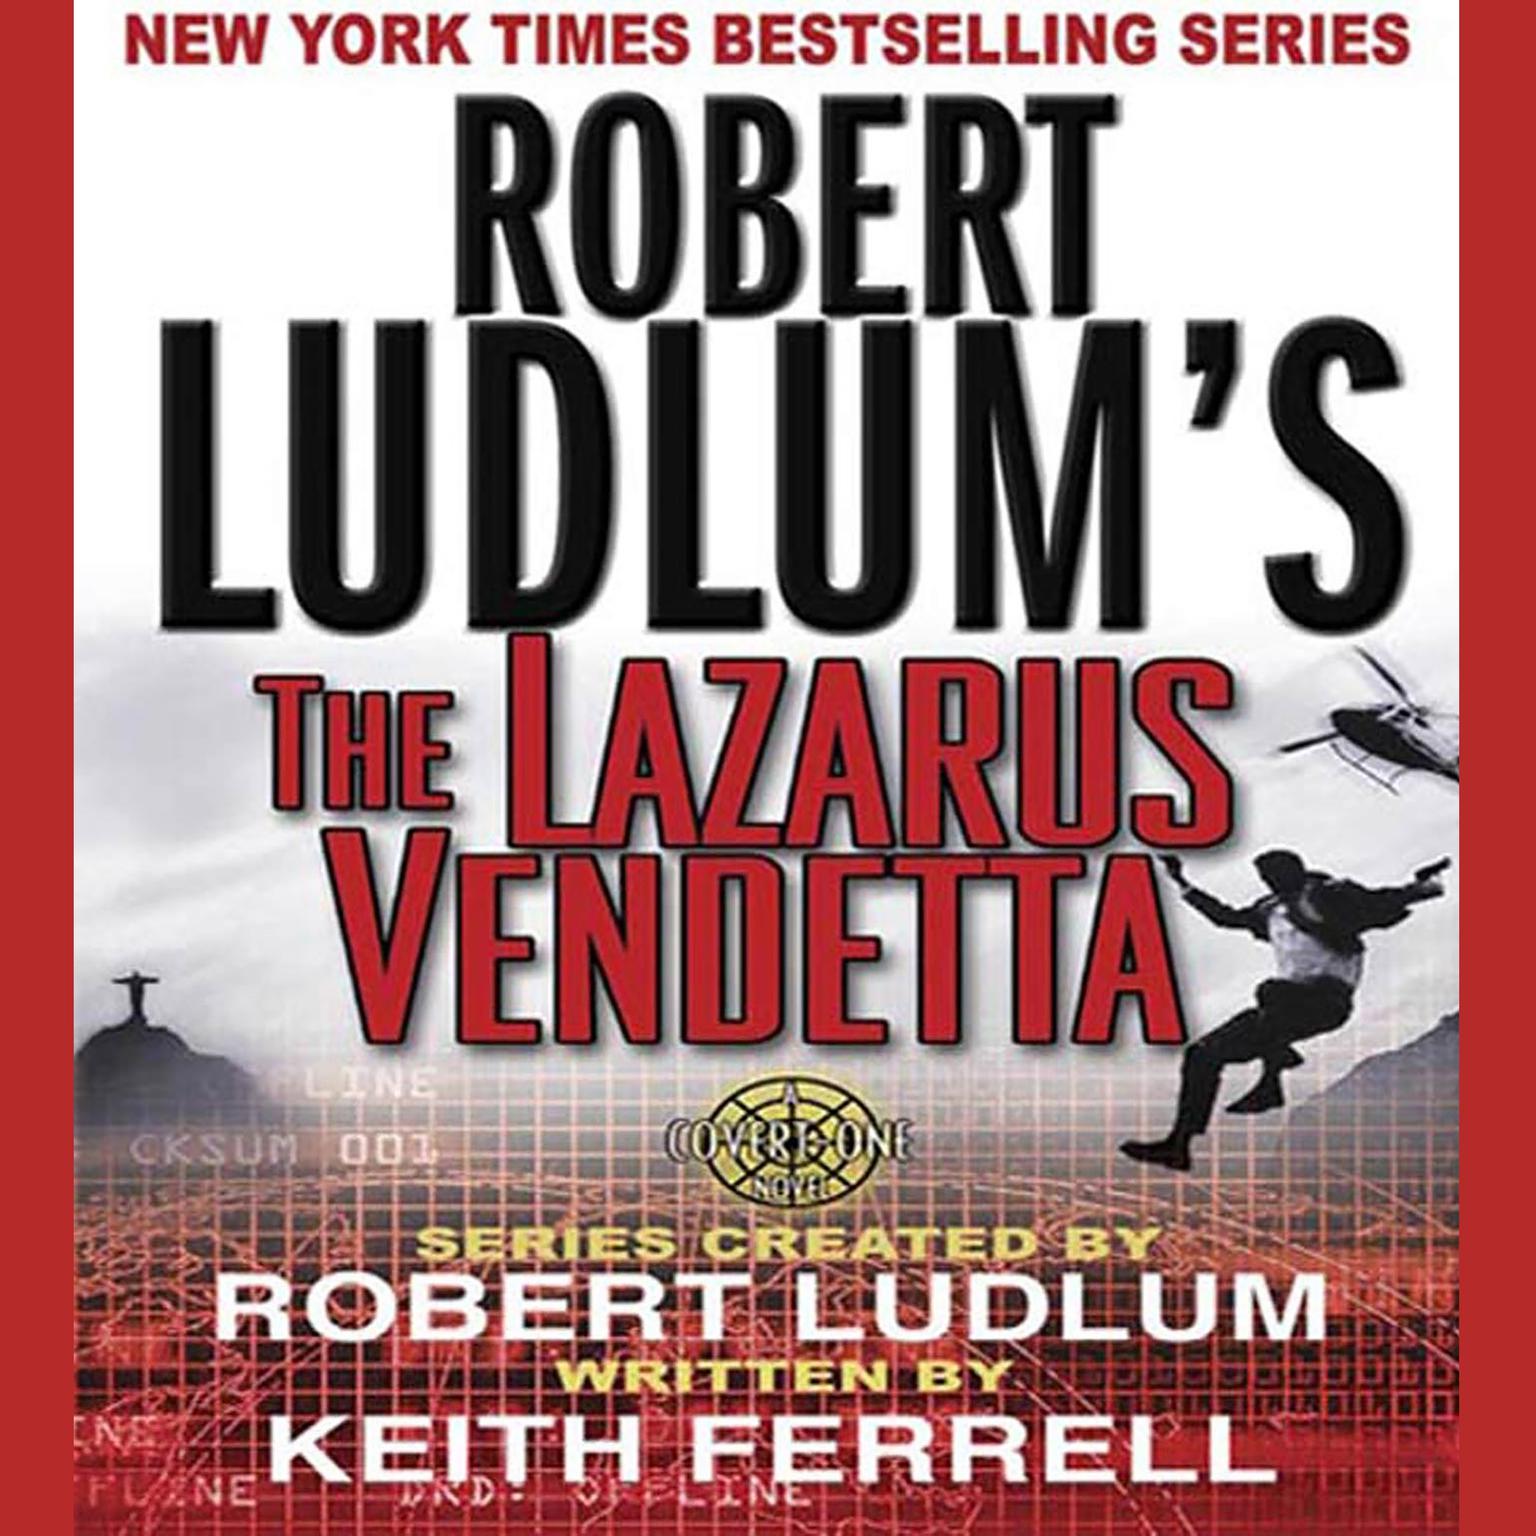 Robert Ludlums The Lazarus Vendetta (Abridged): A Covert-One Novel Audiobook, by Robert Ludlum